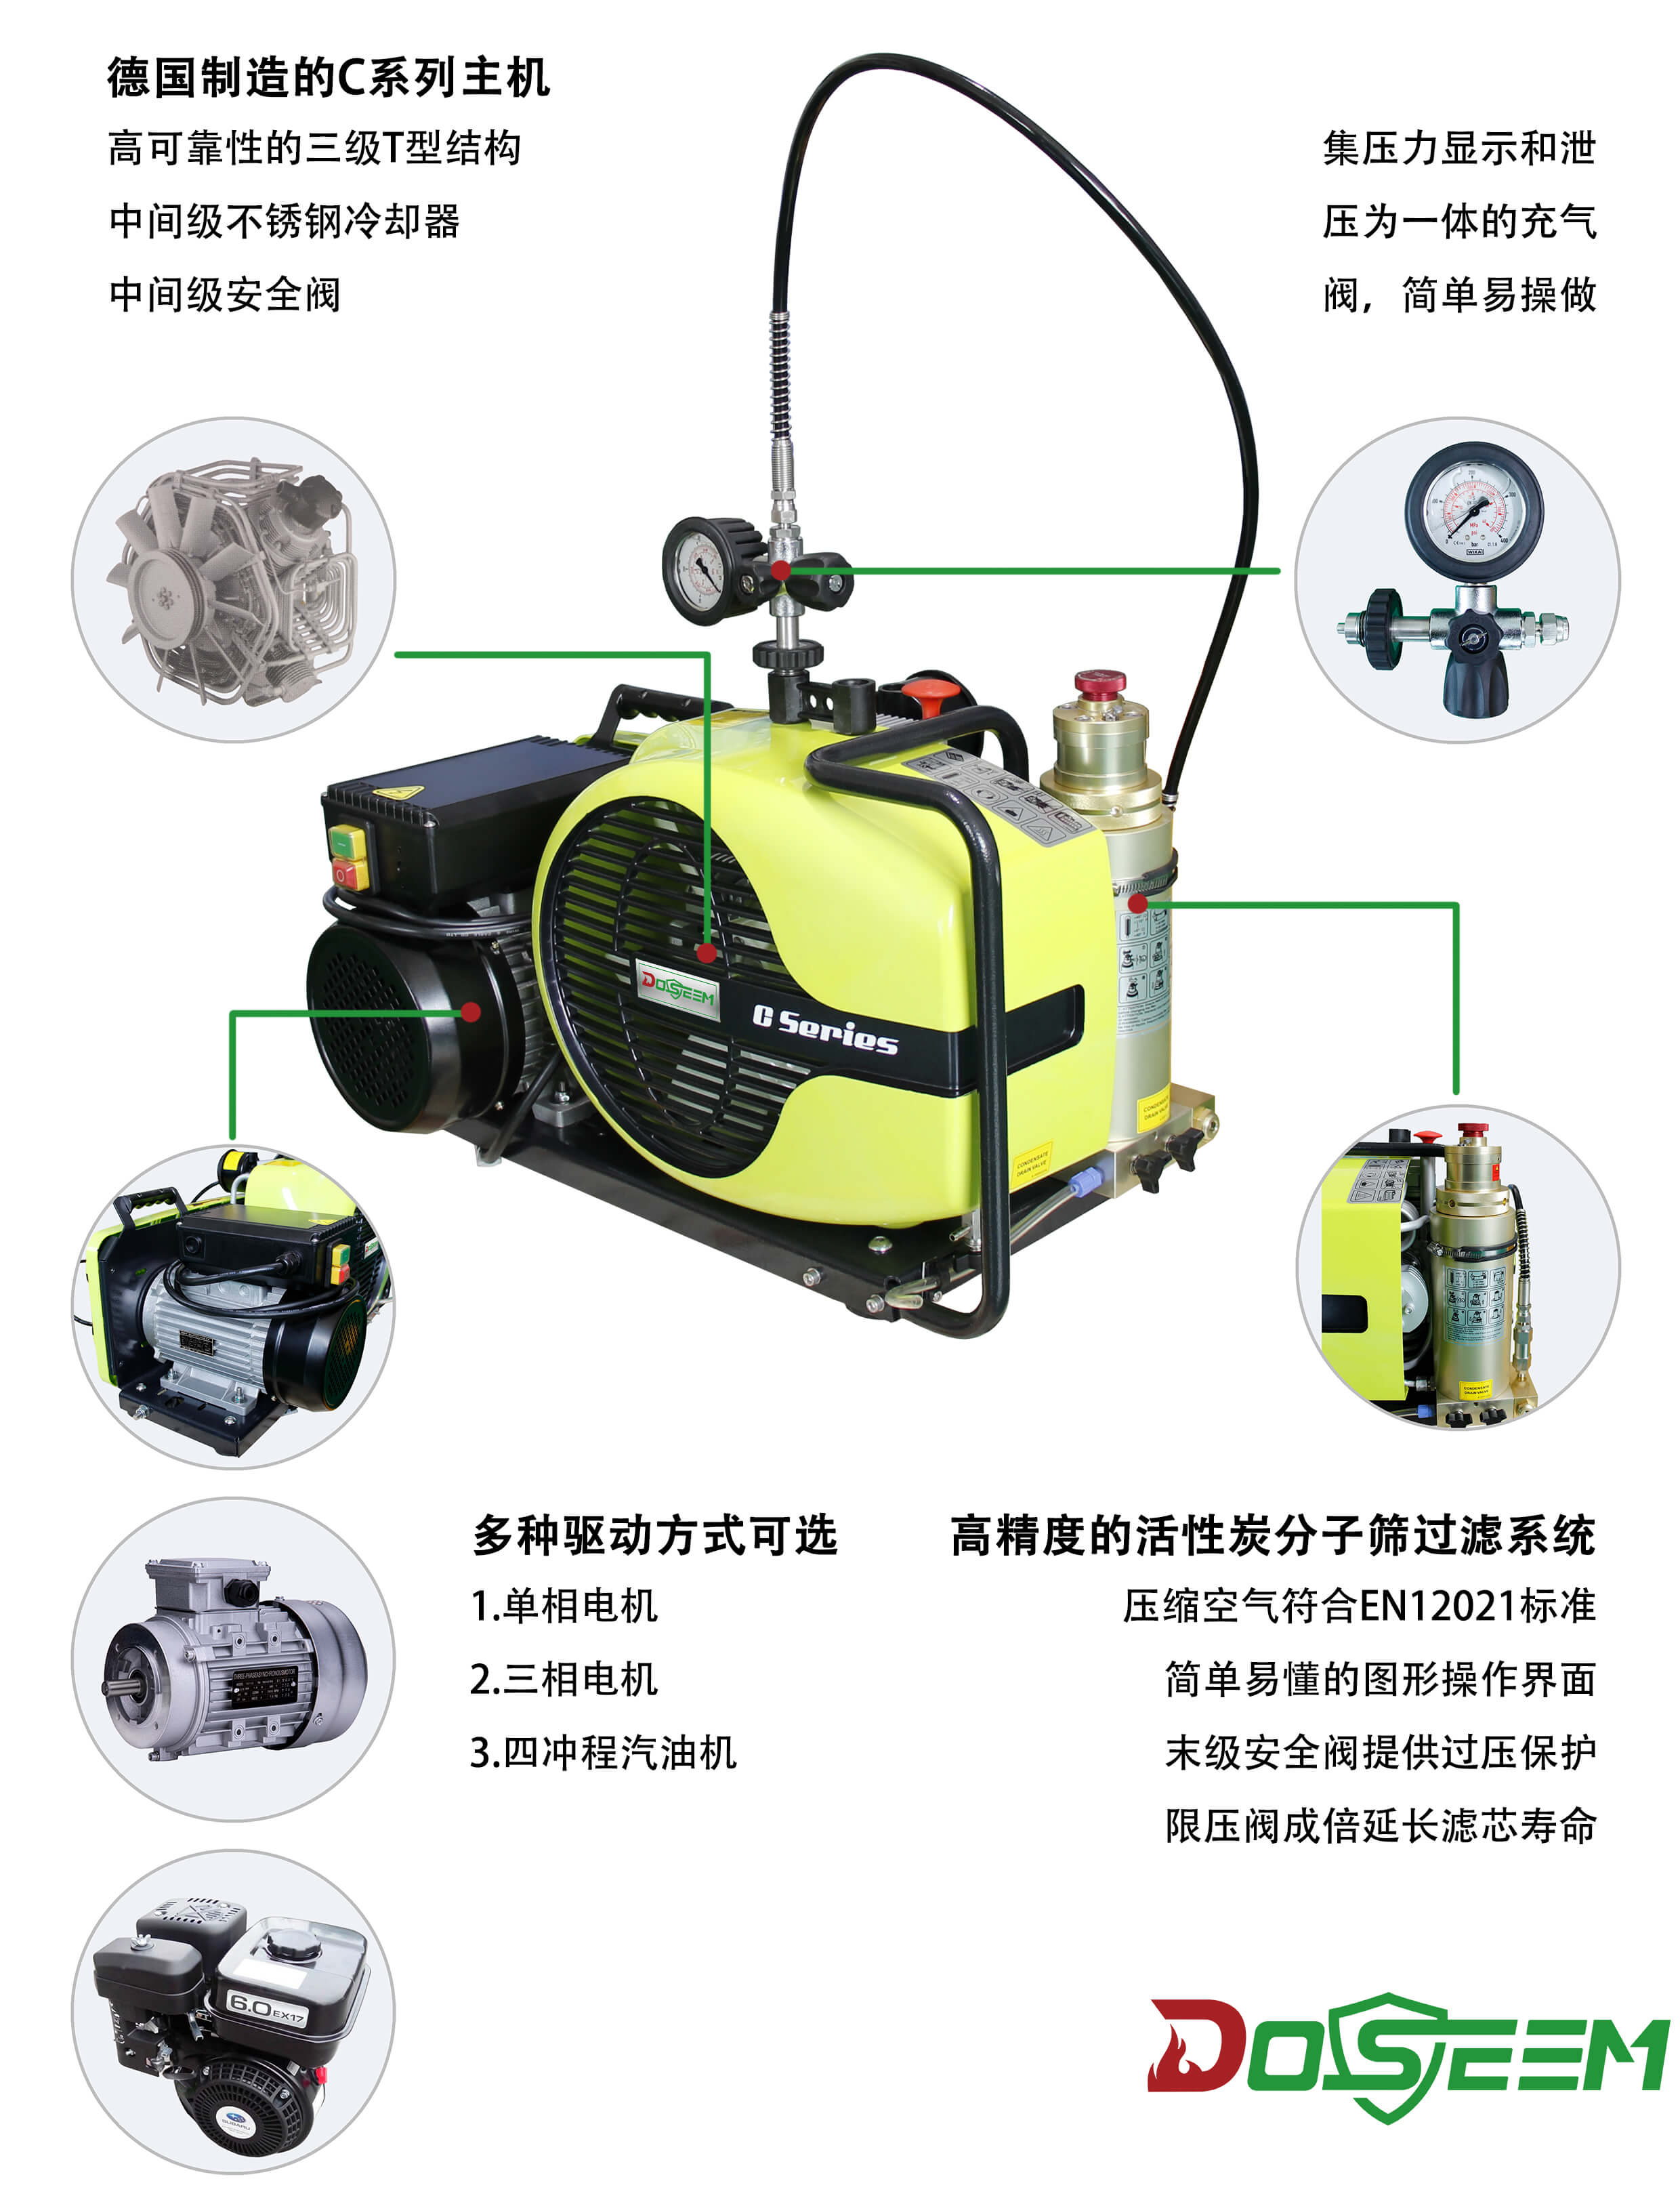 DS120-W/E/B便携式呼吸空气压缩机 1